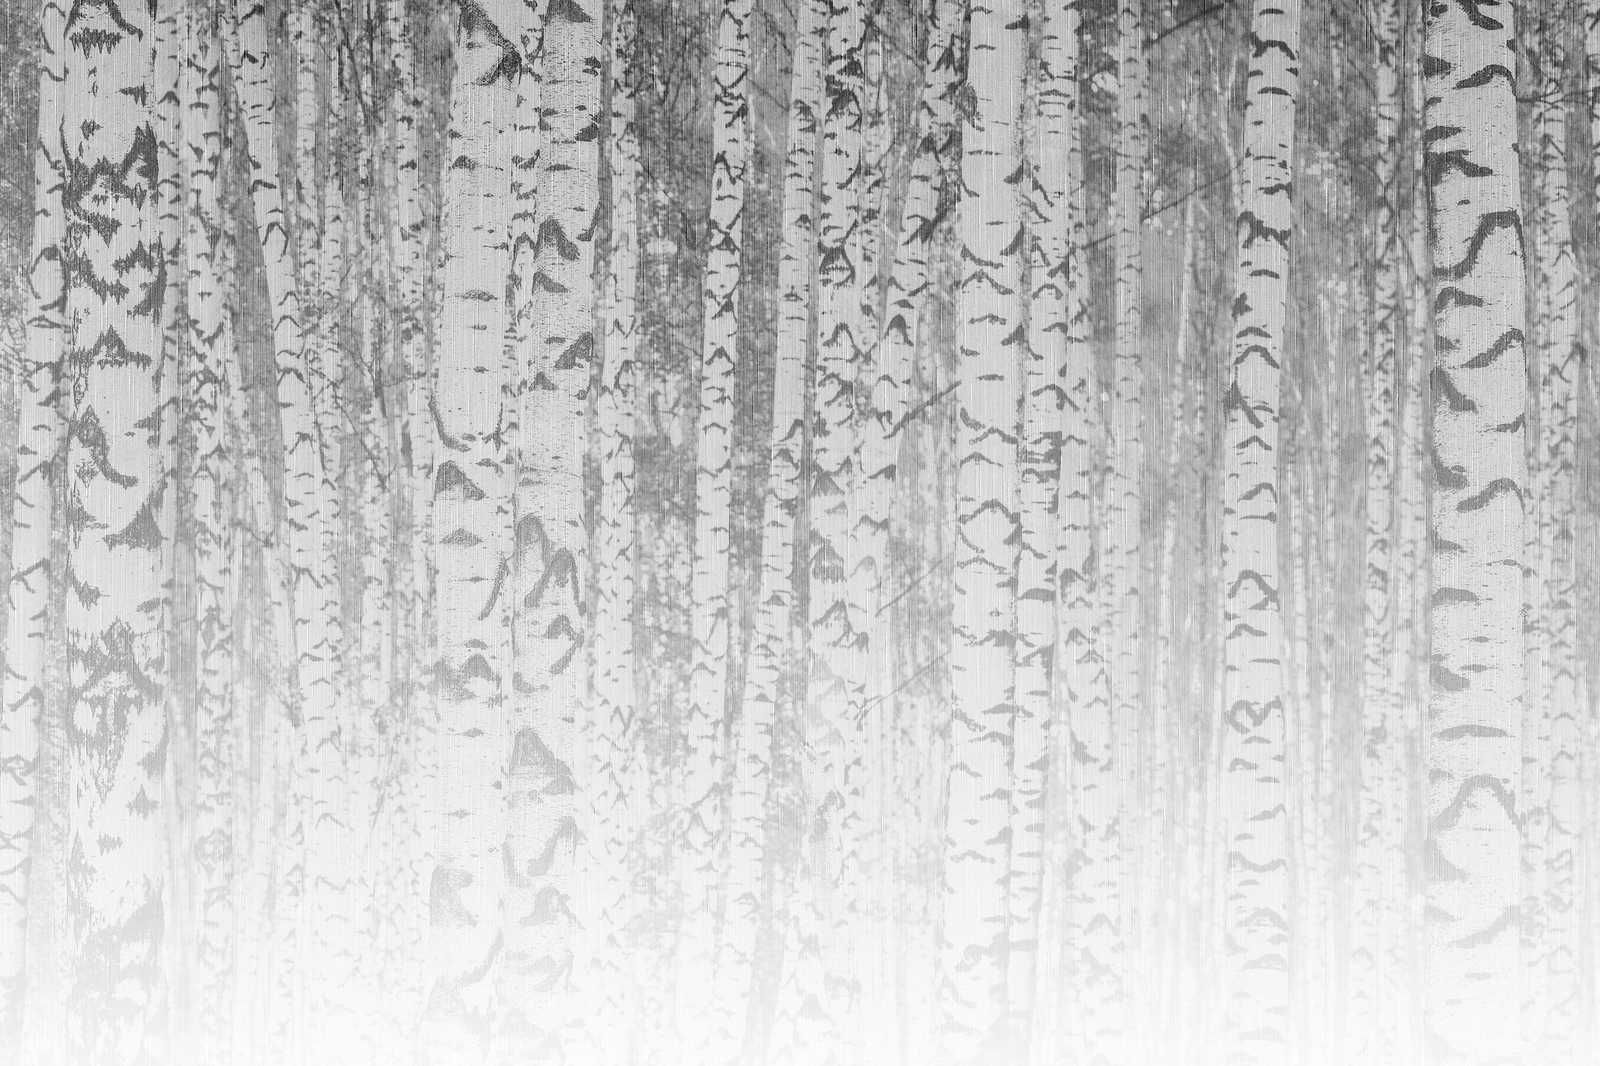             Leinwandbild helle Birken Baumstämme im nebligen Wald – 0,90 m x 0,60 m
        